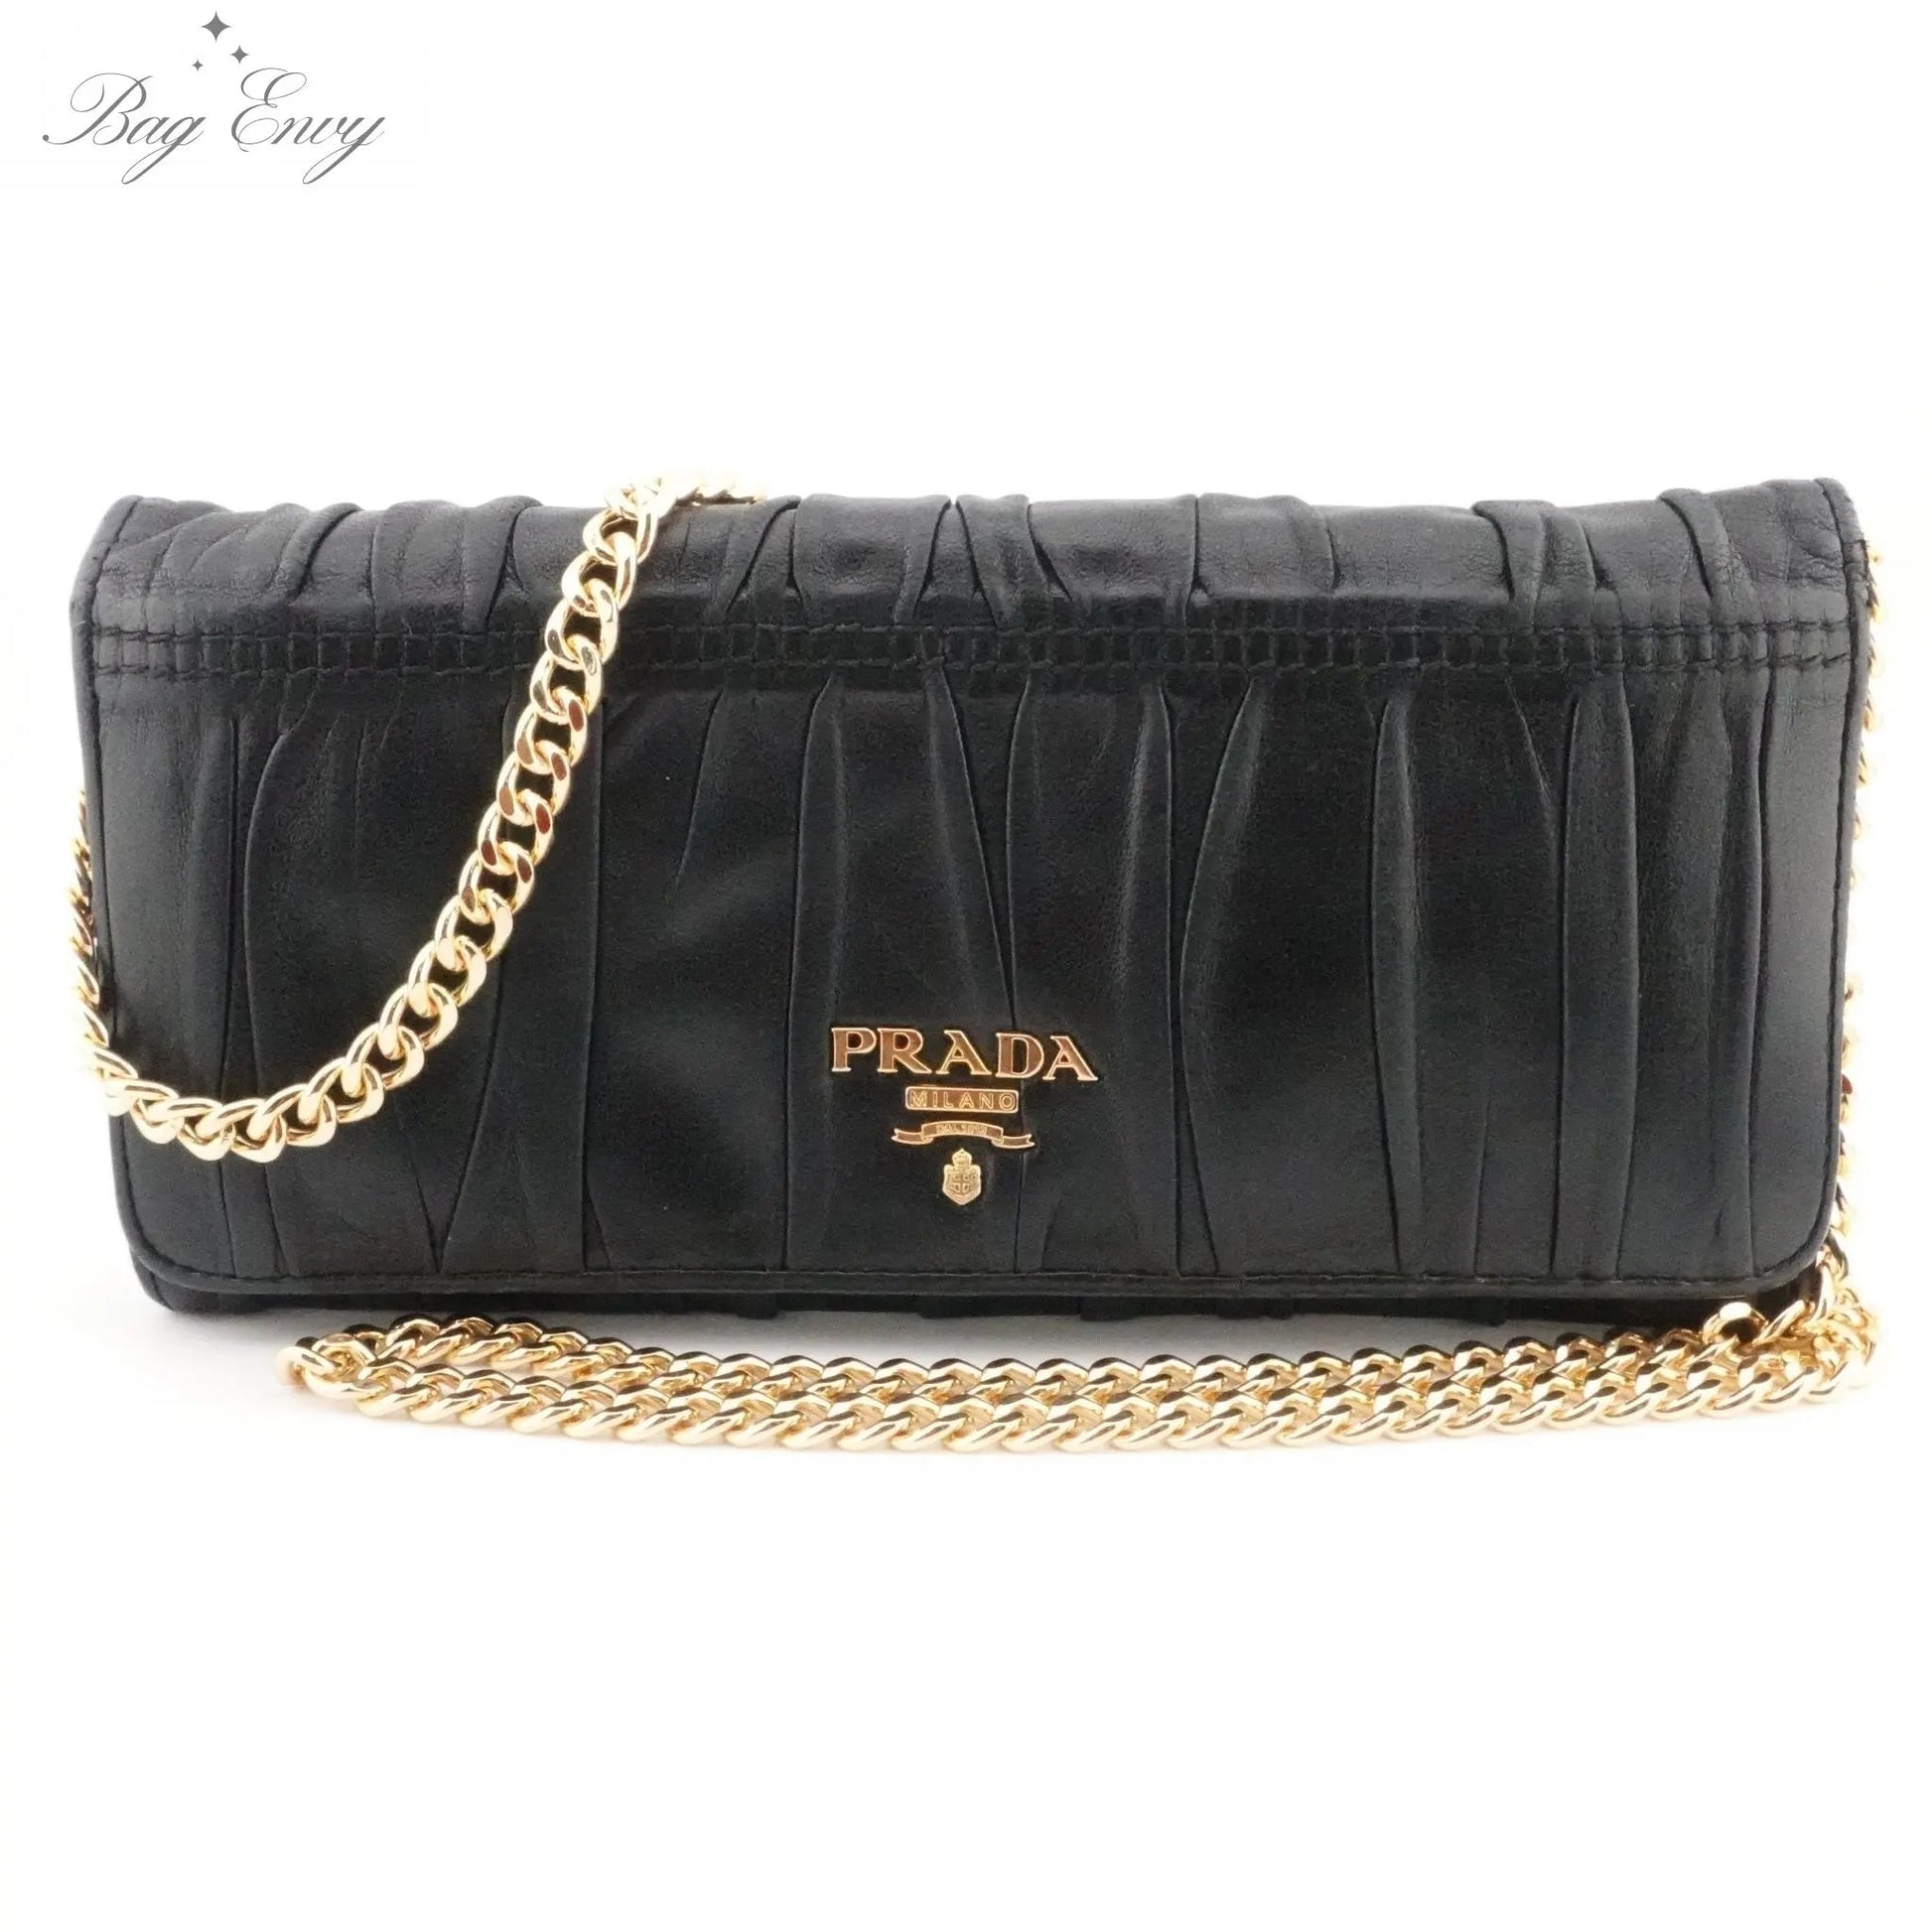 PRADA Nappa Gaufre Wallet on Chain - Bag Envy